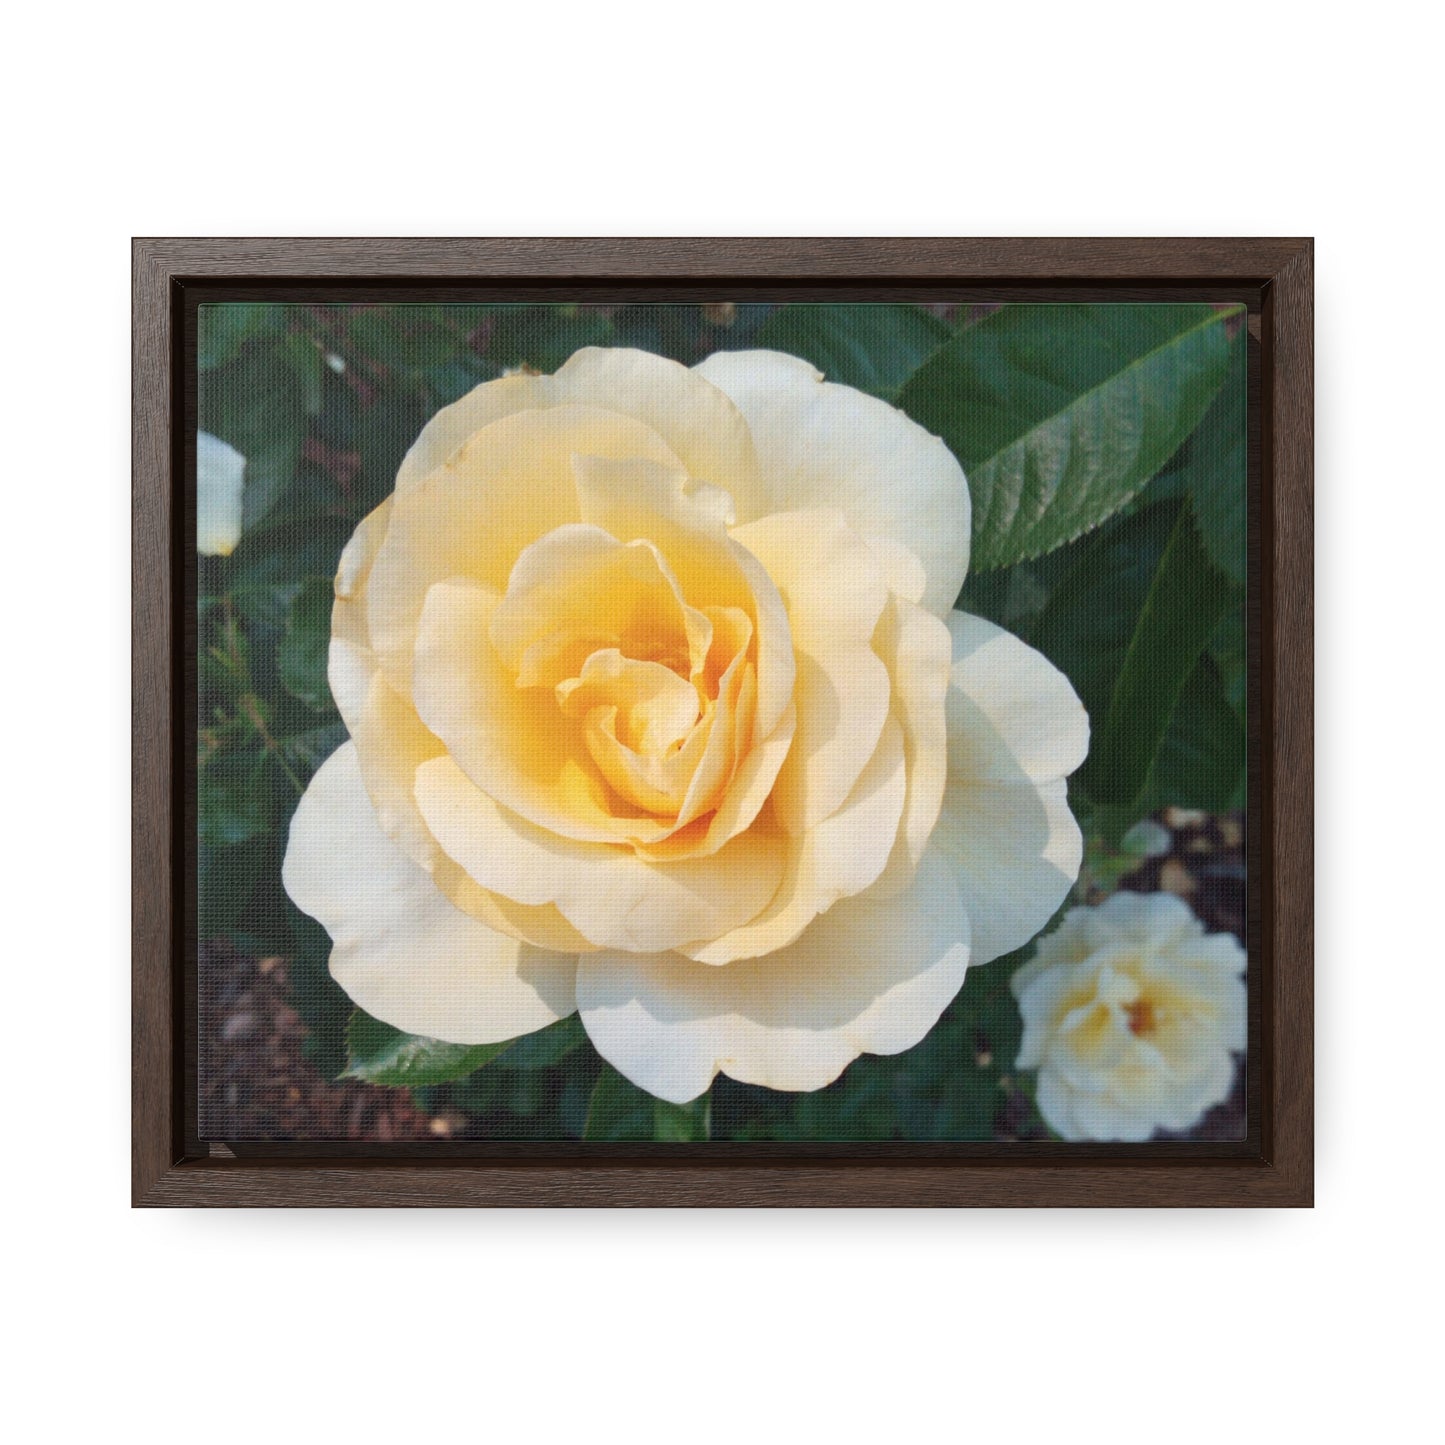 Cream Rose Gallery Canvas Wraps Framed